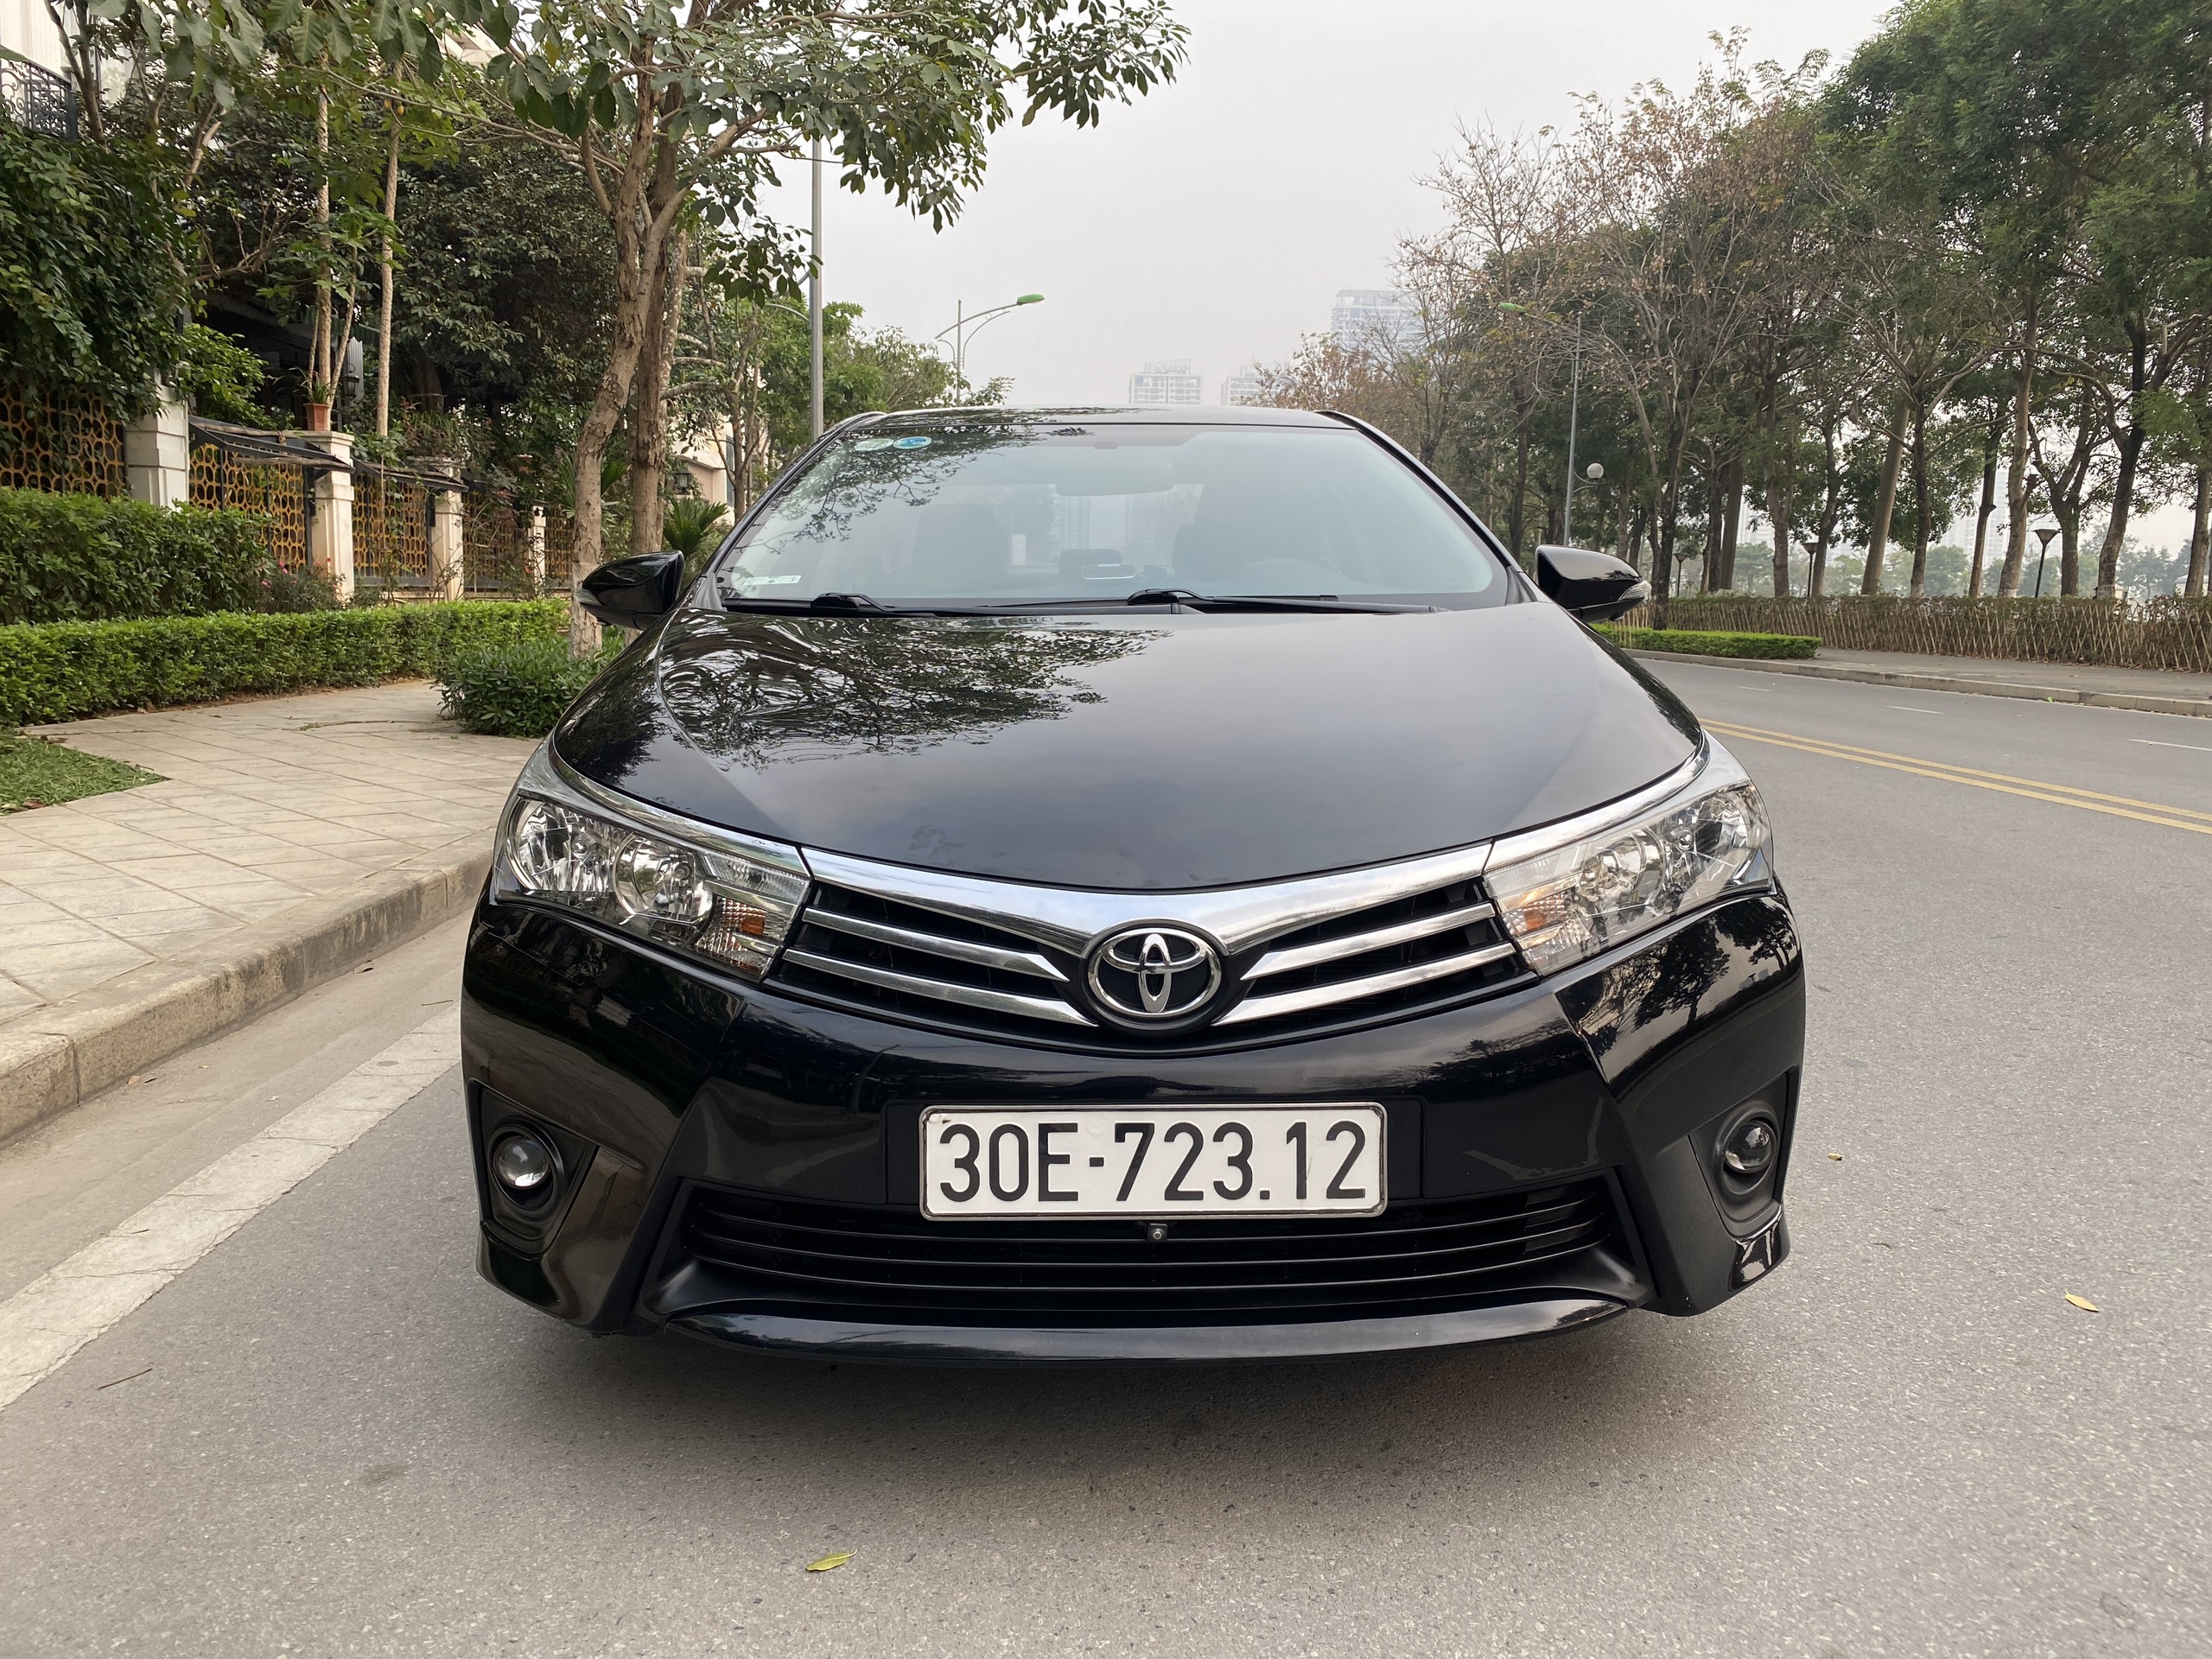 Toyota Corolla Altis 1.8G 2017